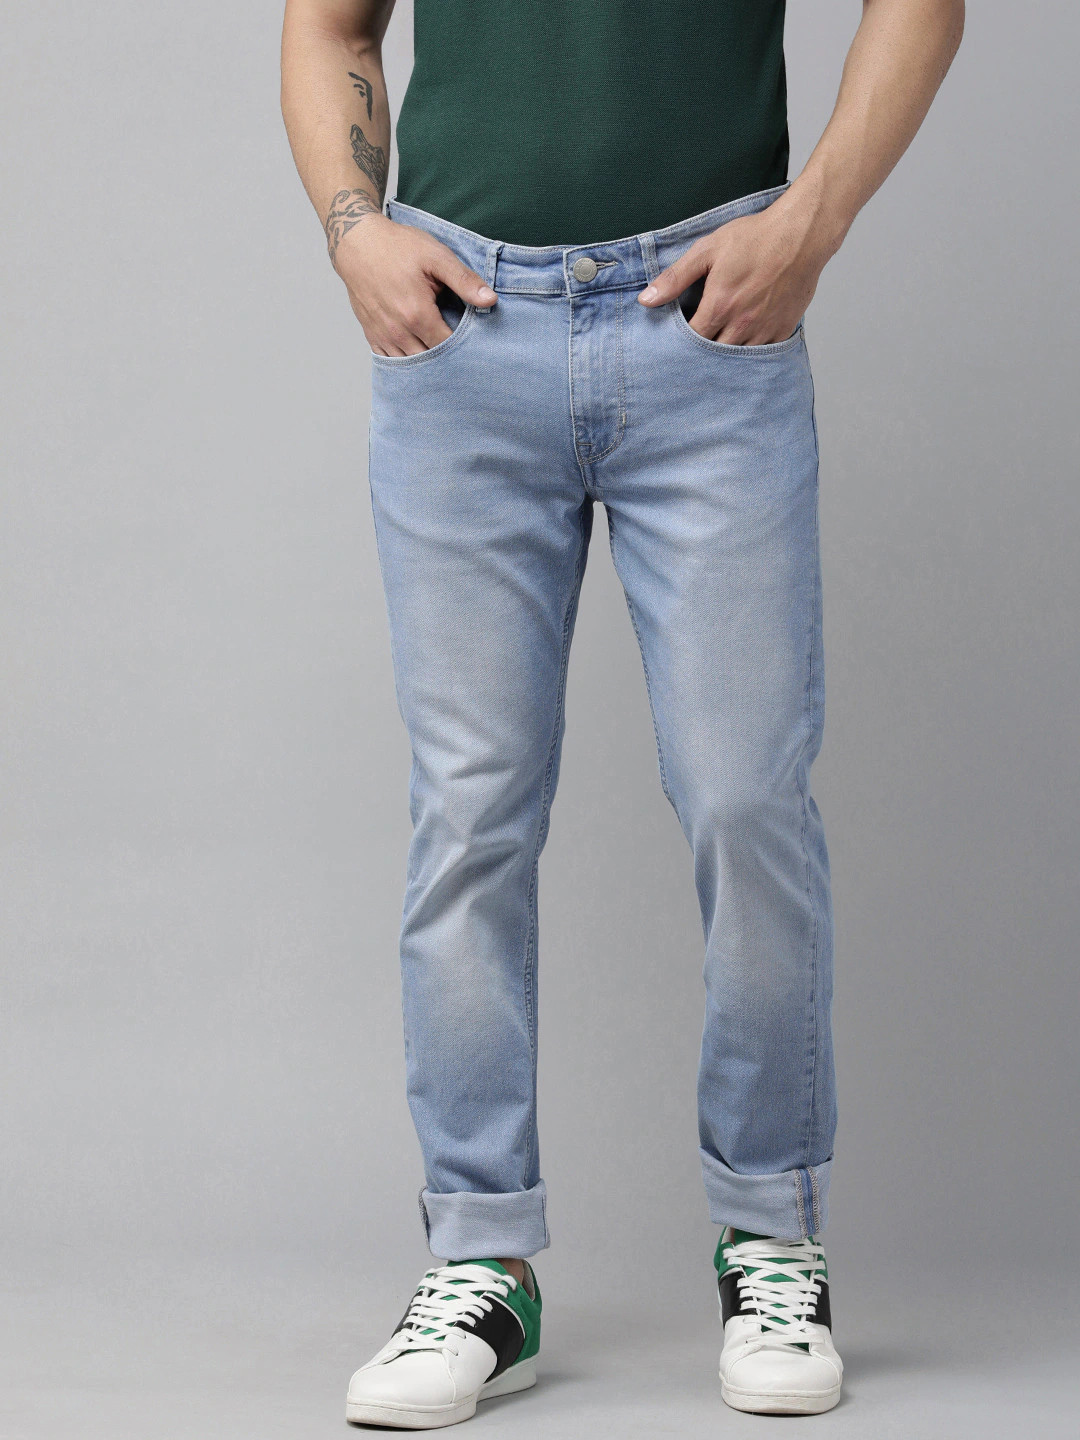 Buy U S Polo Assn Denim Co Men Blue Regallo Skinny Fit Mid Rise Light Fade Jeans